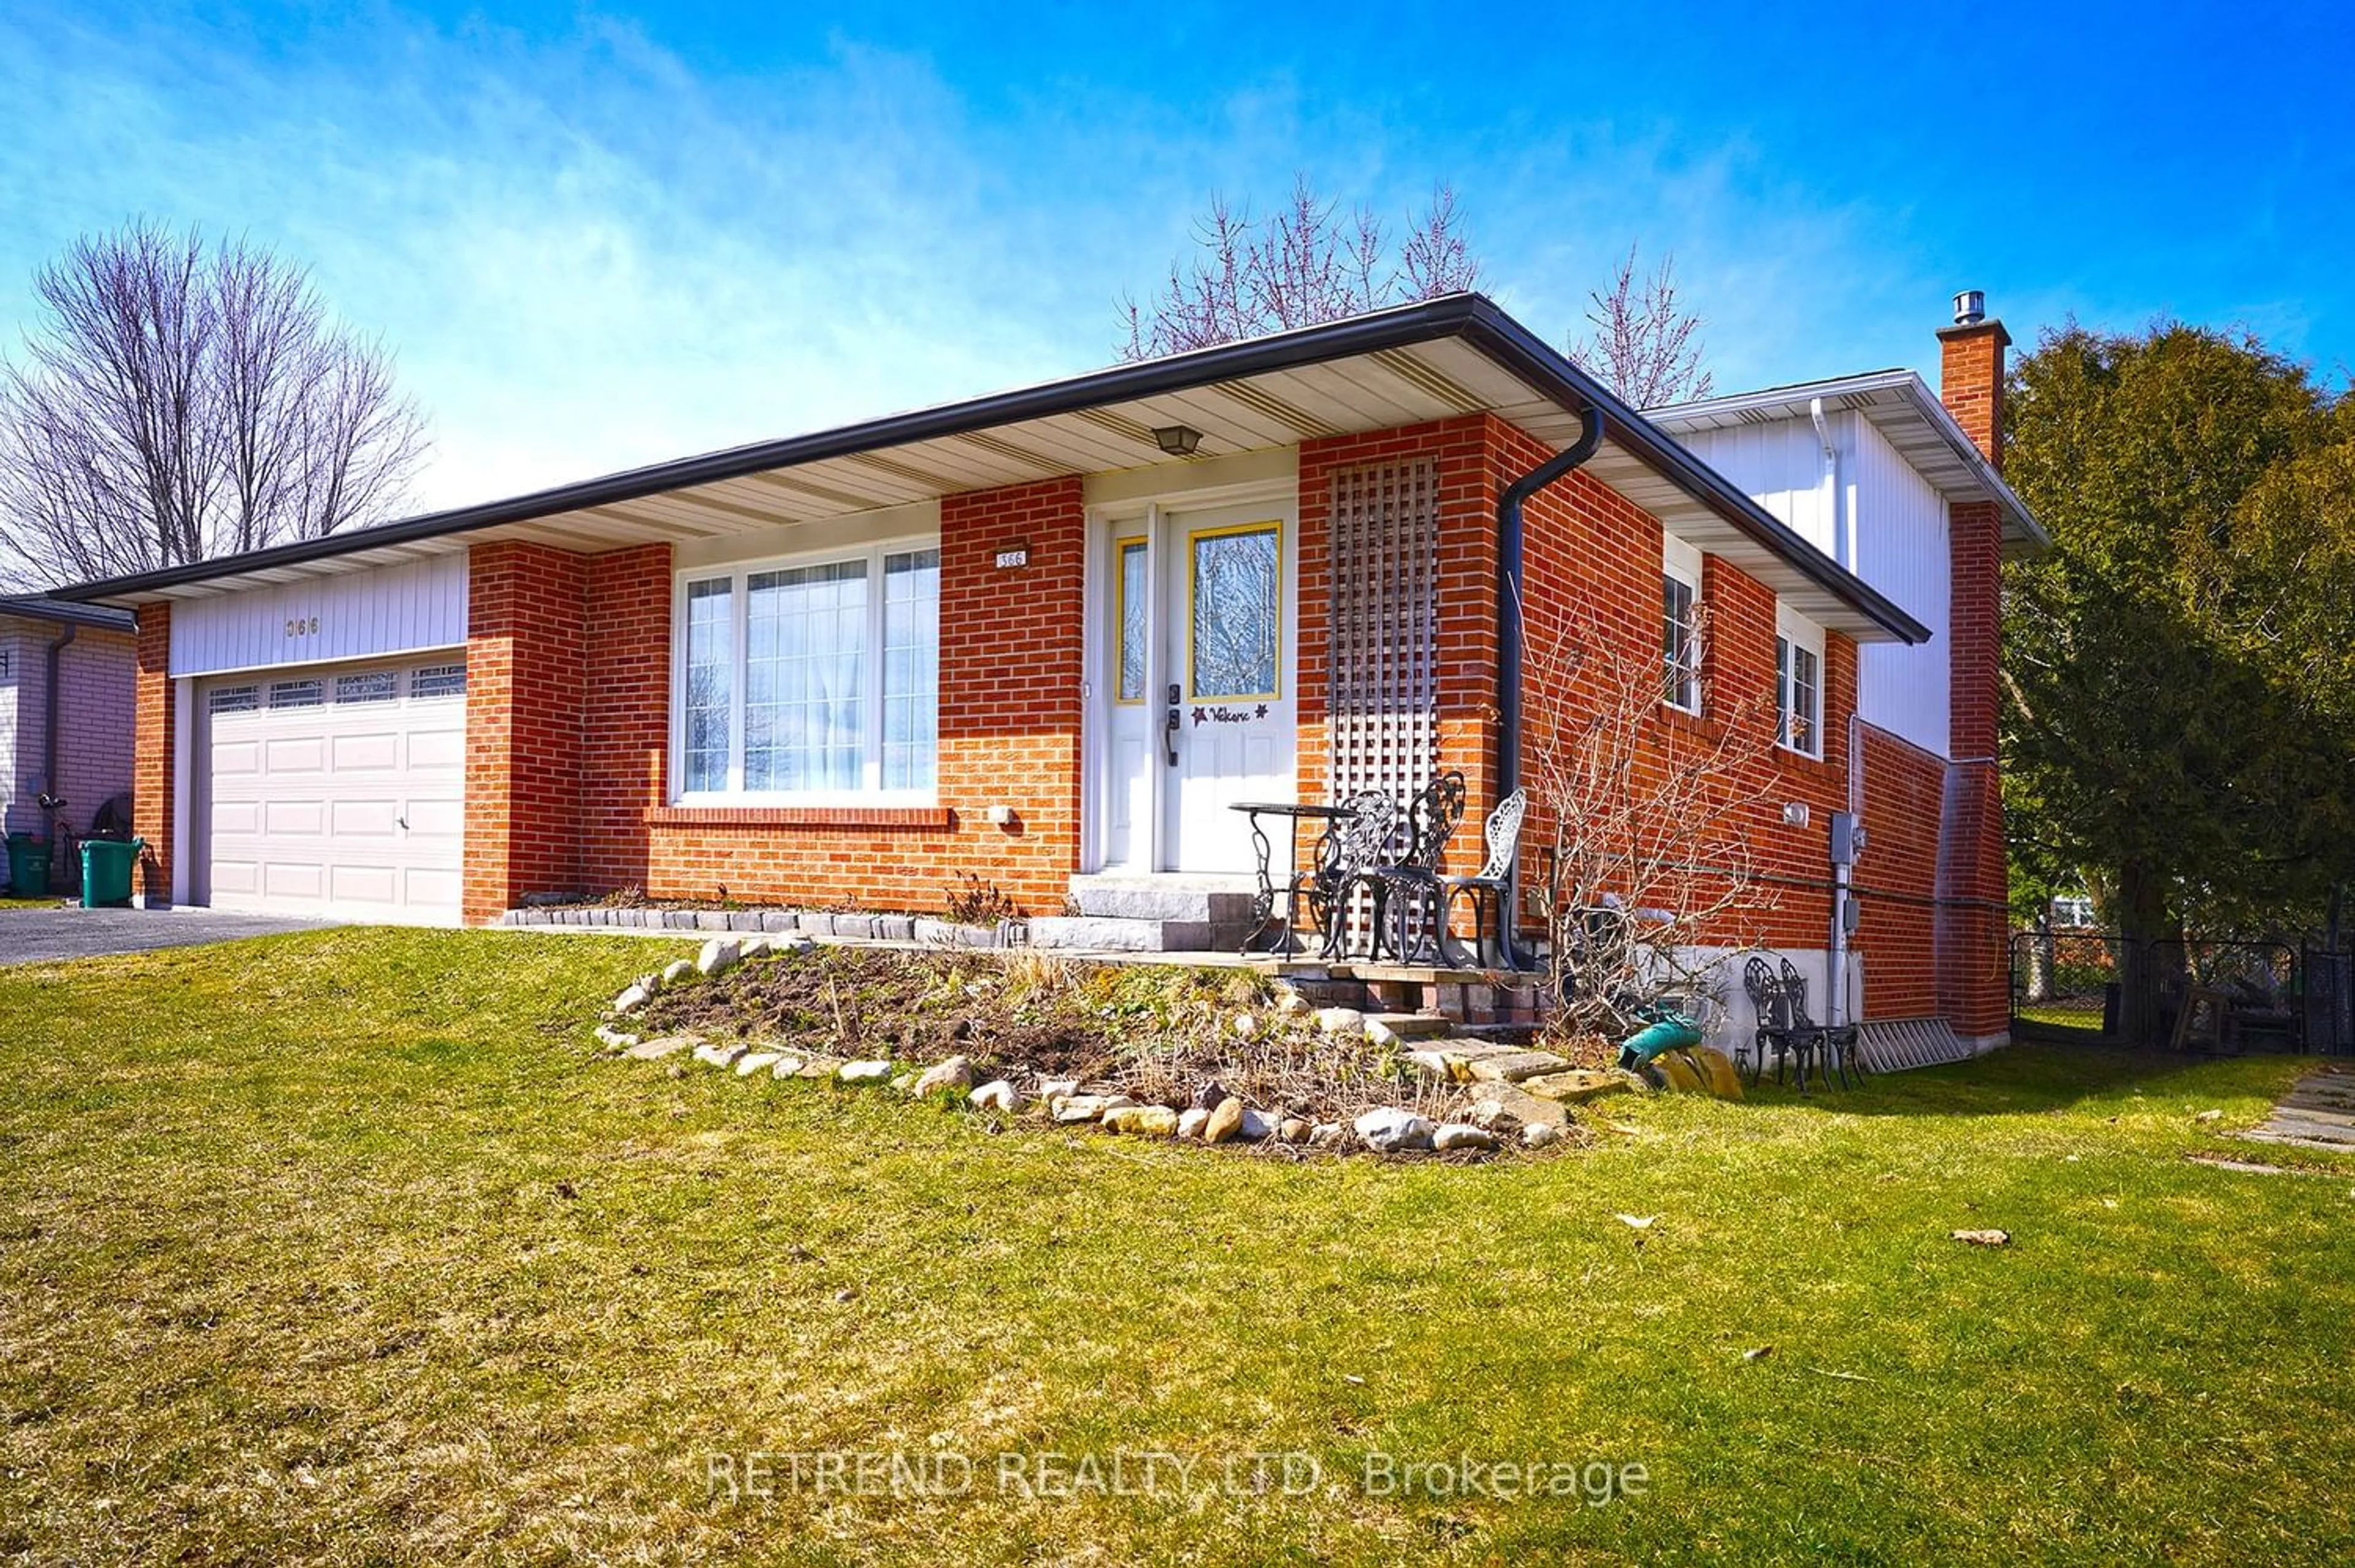 Frontside or backside of a home for 366 Jelly St, Shelburne Ontario L9V 2Y6